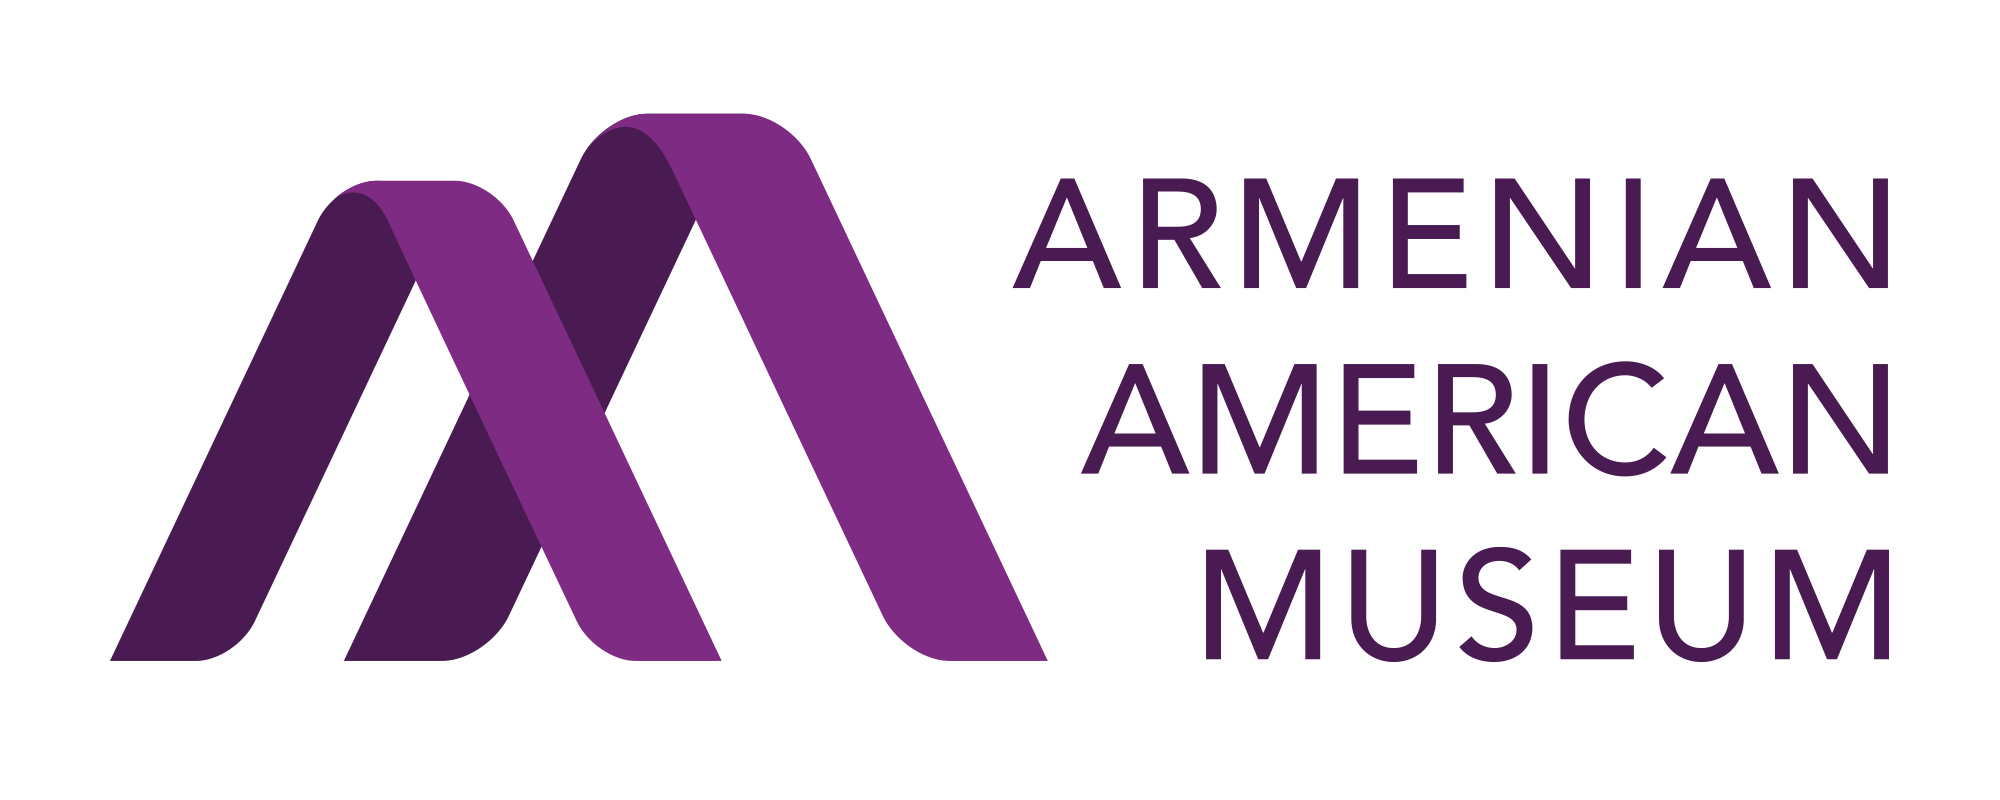 Armenian American Museum Logo Press